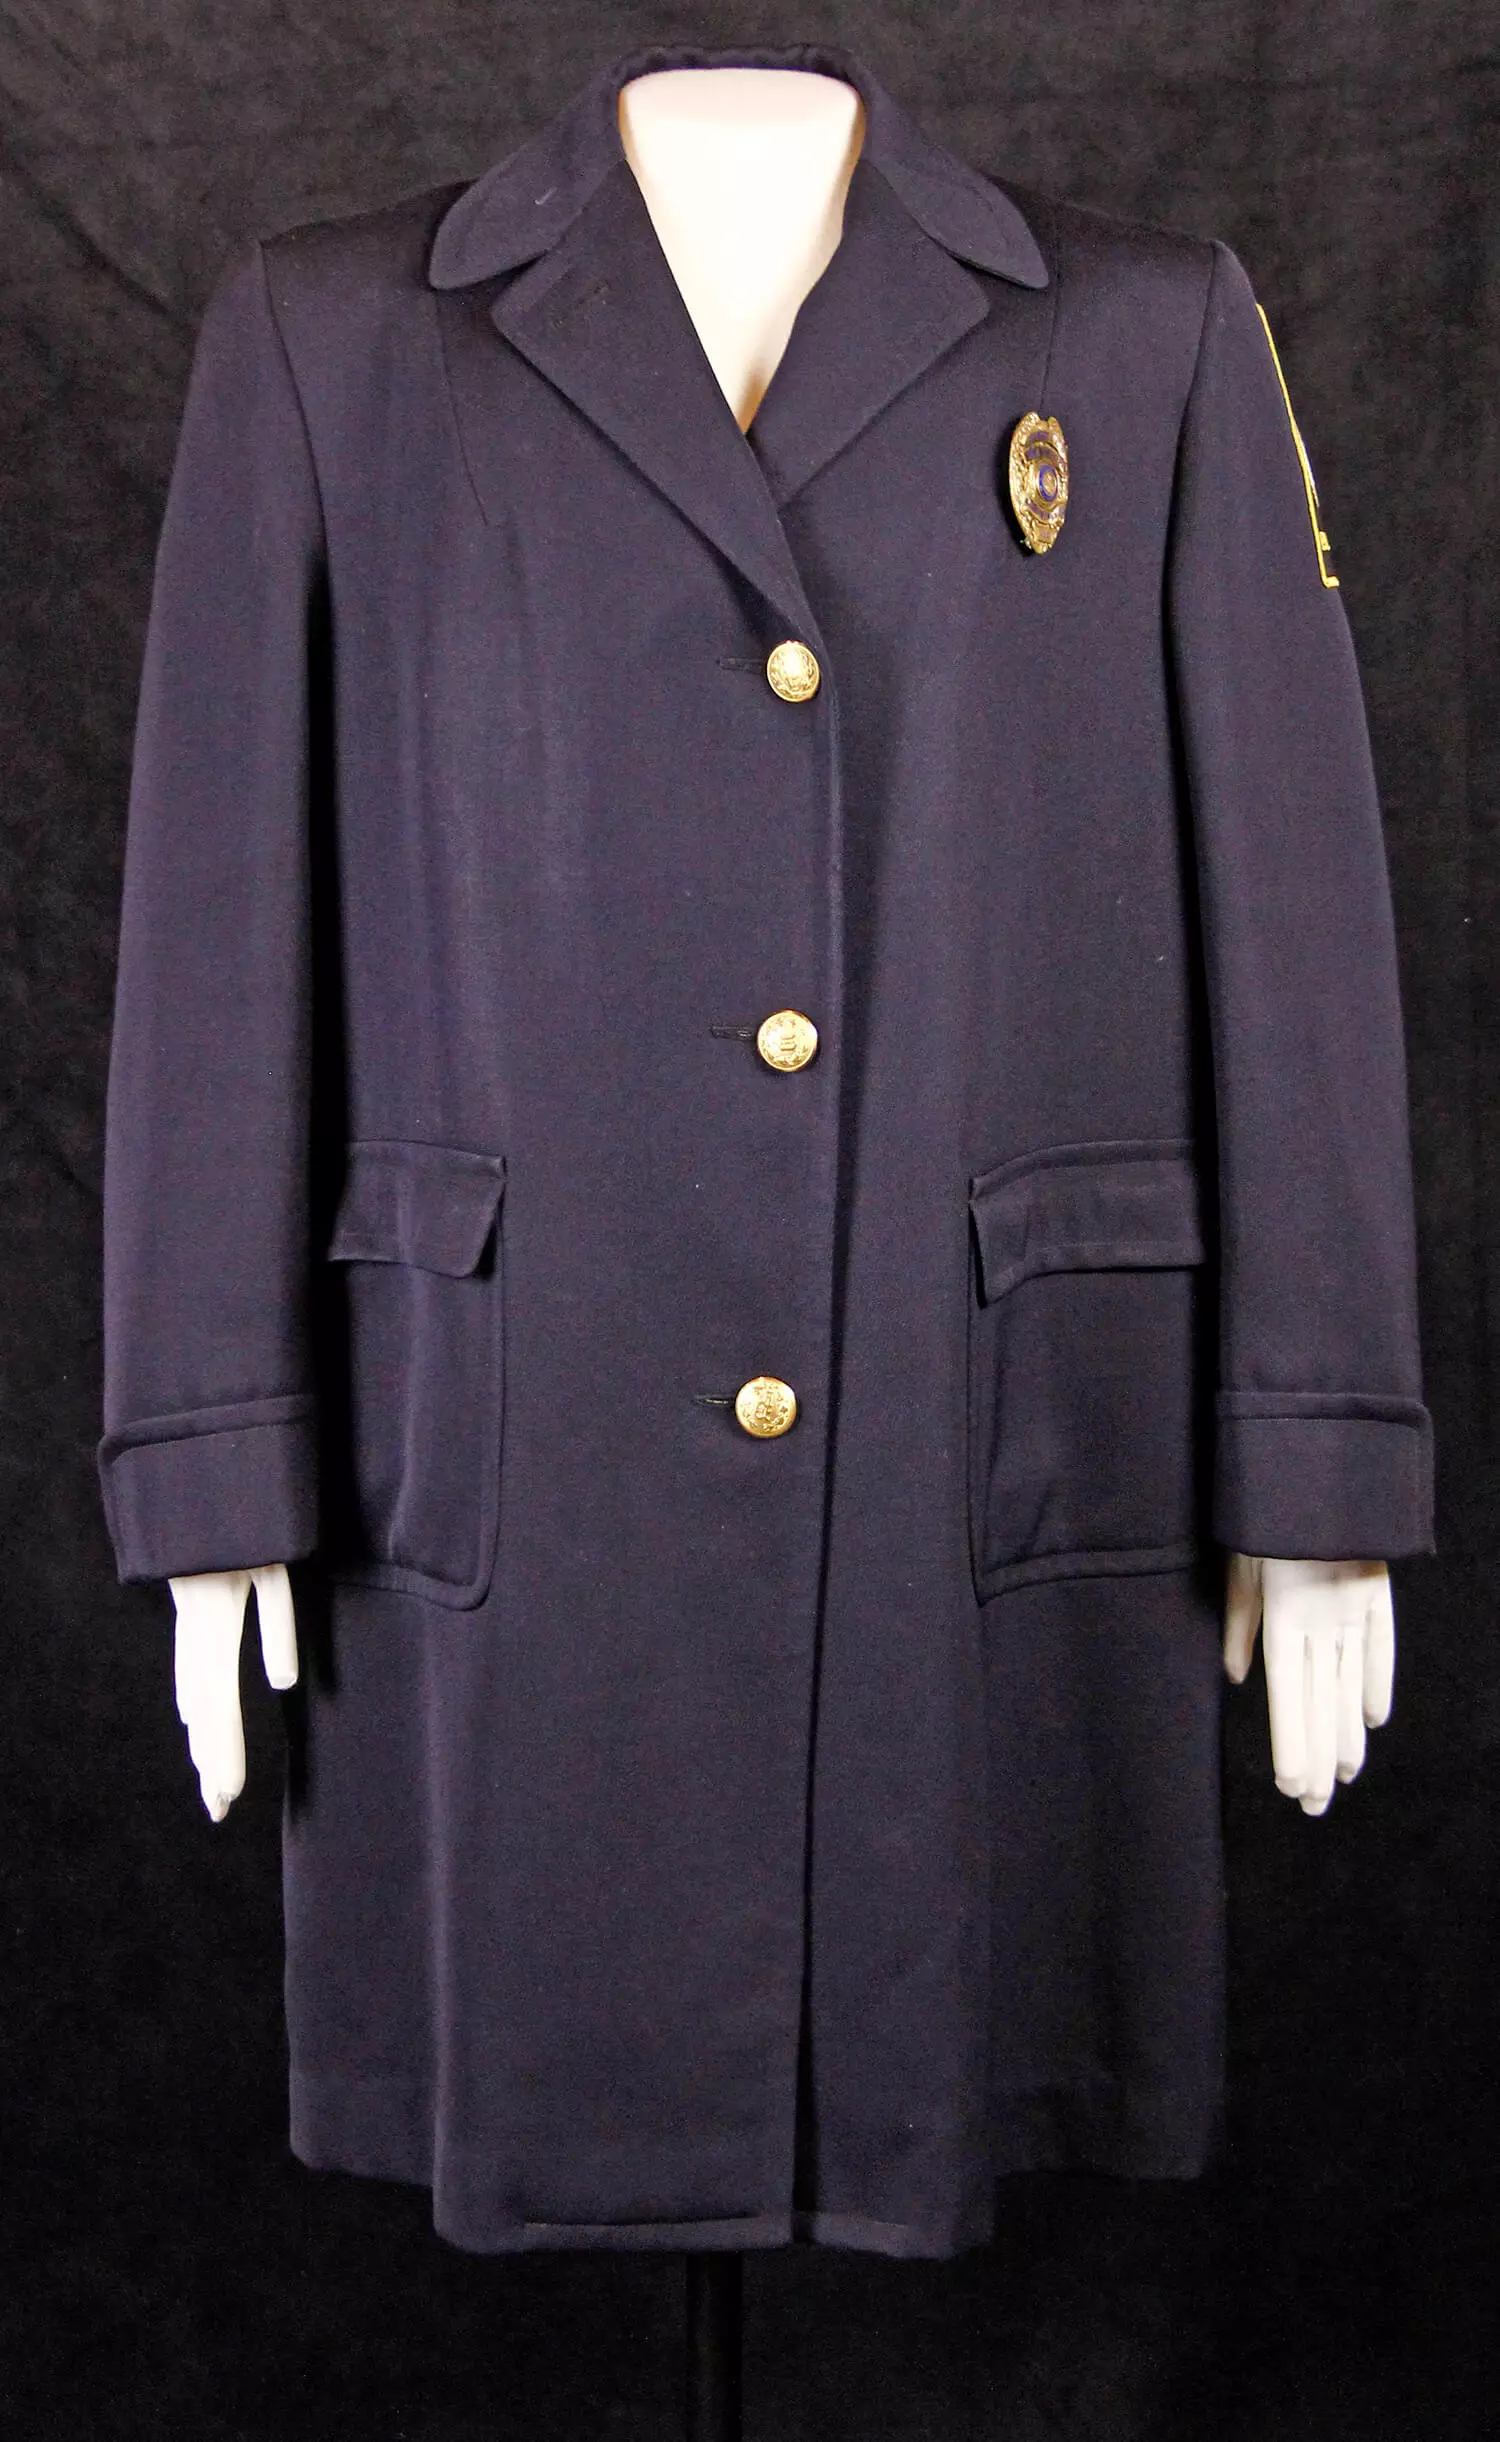 Dark blue long police coat with badge on upper left.